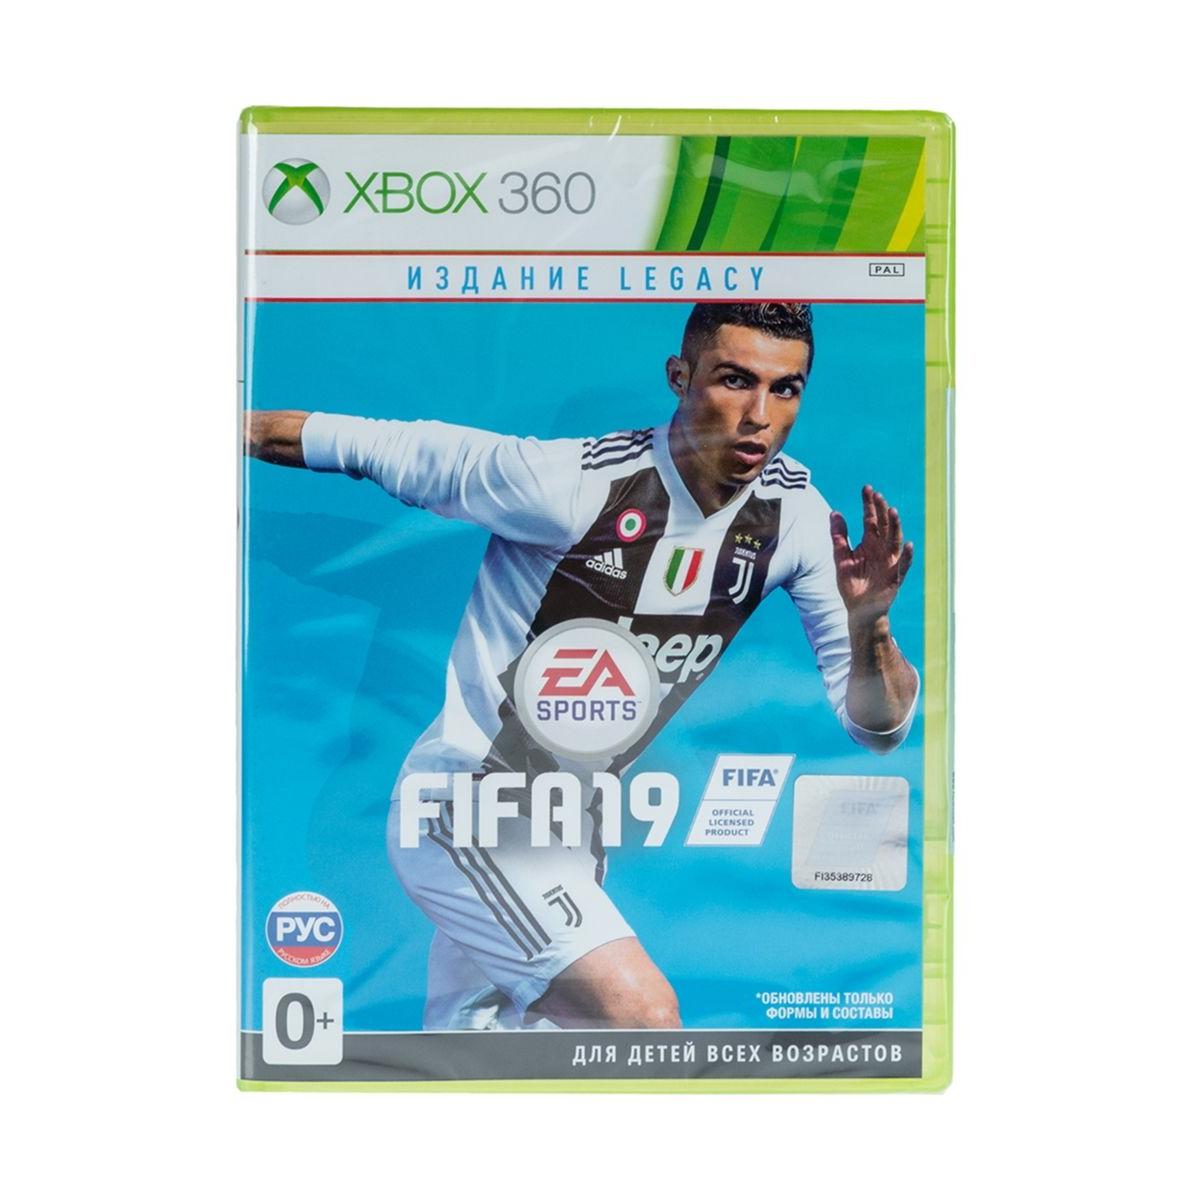 Fifa 19 xbox 360. FIFA 19 Legacy Edition Xbox 360. FIFA 19 Xbox 360 диск. FIFA 19 Legacy Edition Xbox 360 lt3.0 накатка. FIFA 19 Legacy Edition Xbox 360 (русская версия).